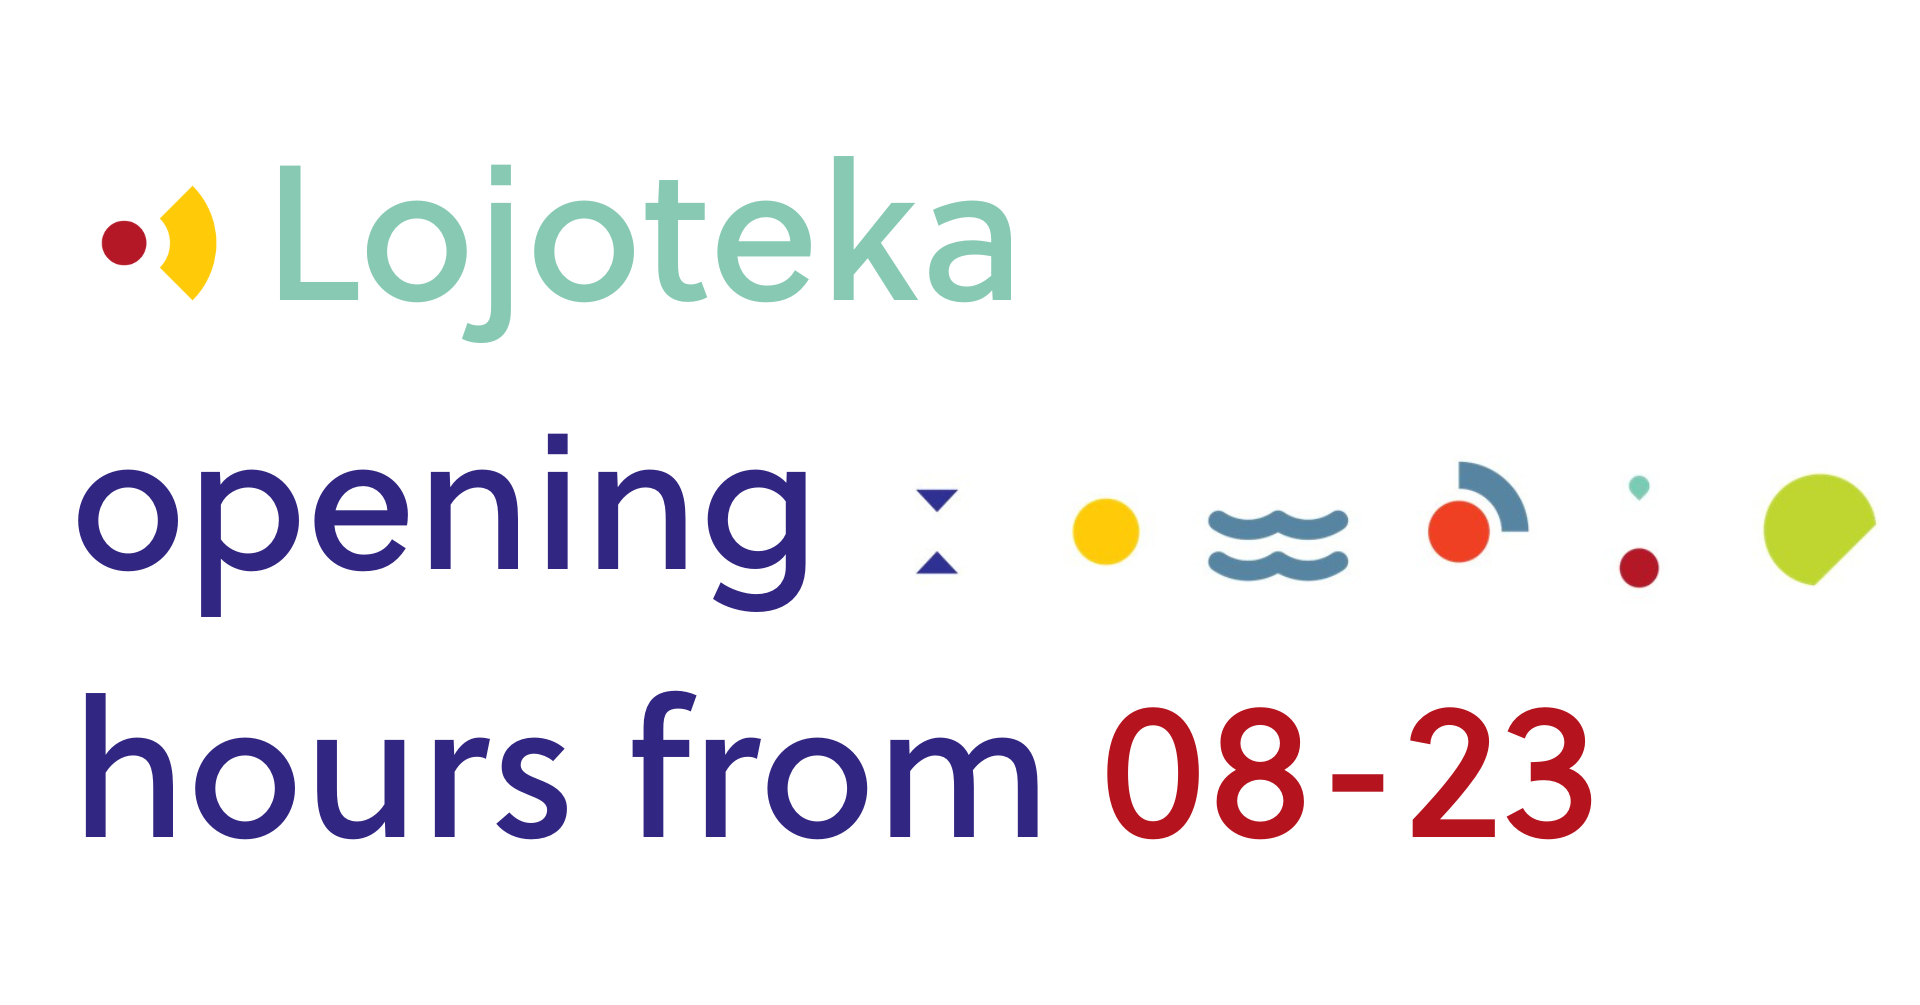 Lojoteka opening hours from 08-23